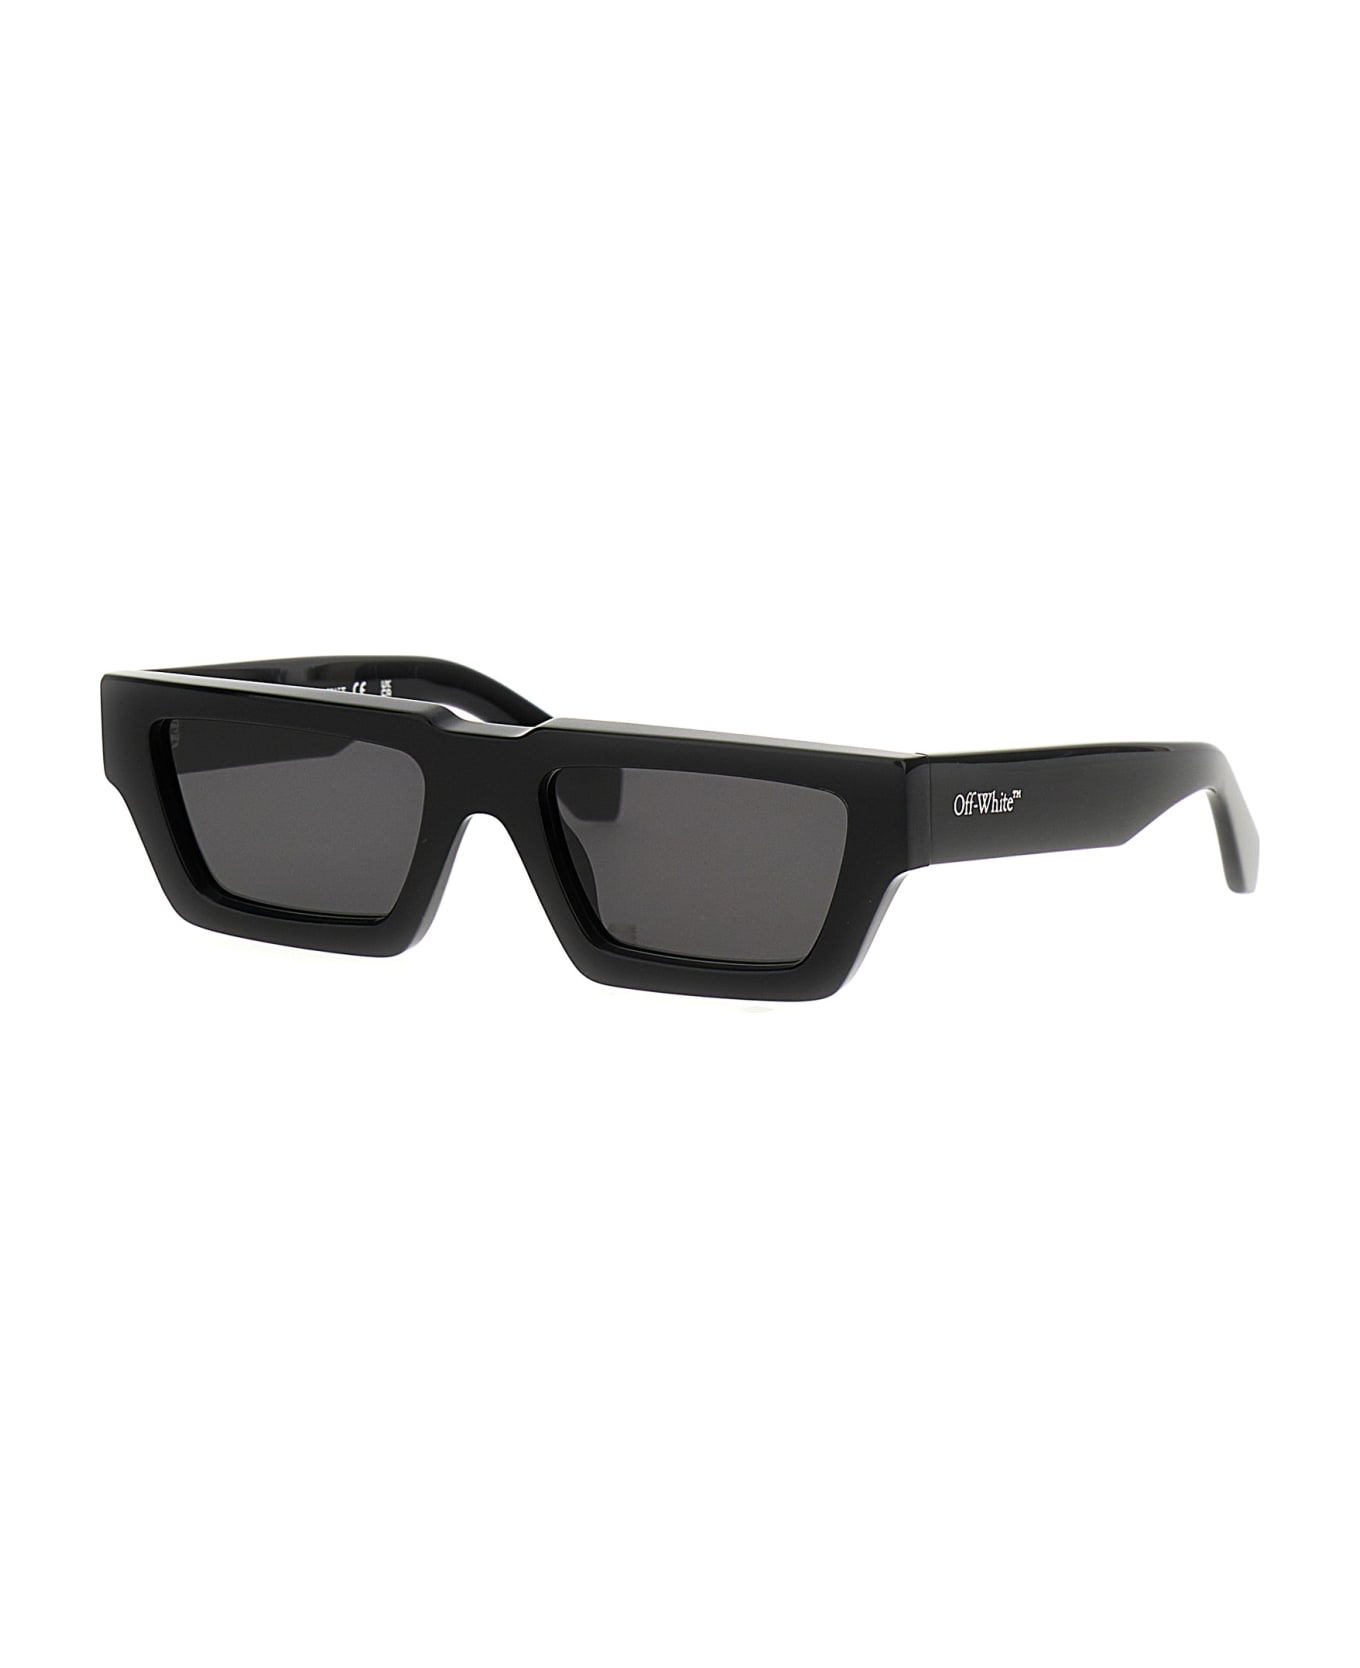 Off-White Manchester Sunglasses - Black サングラス